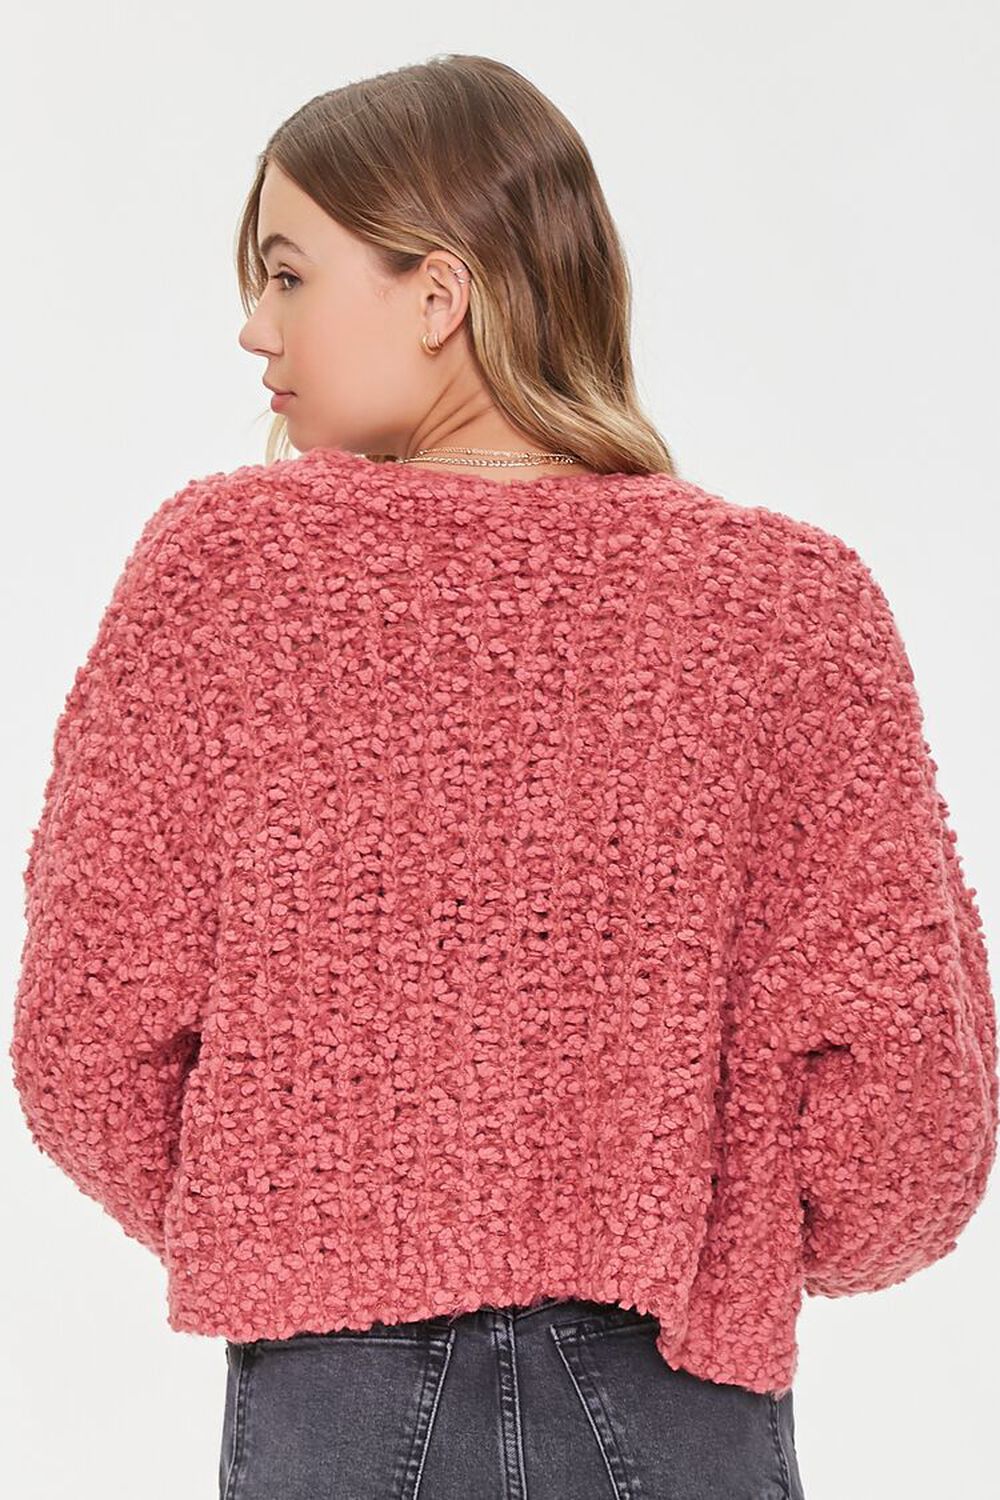 Popcorn Knit Cardigan Sweater